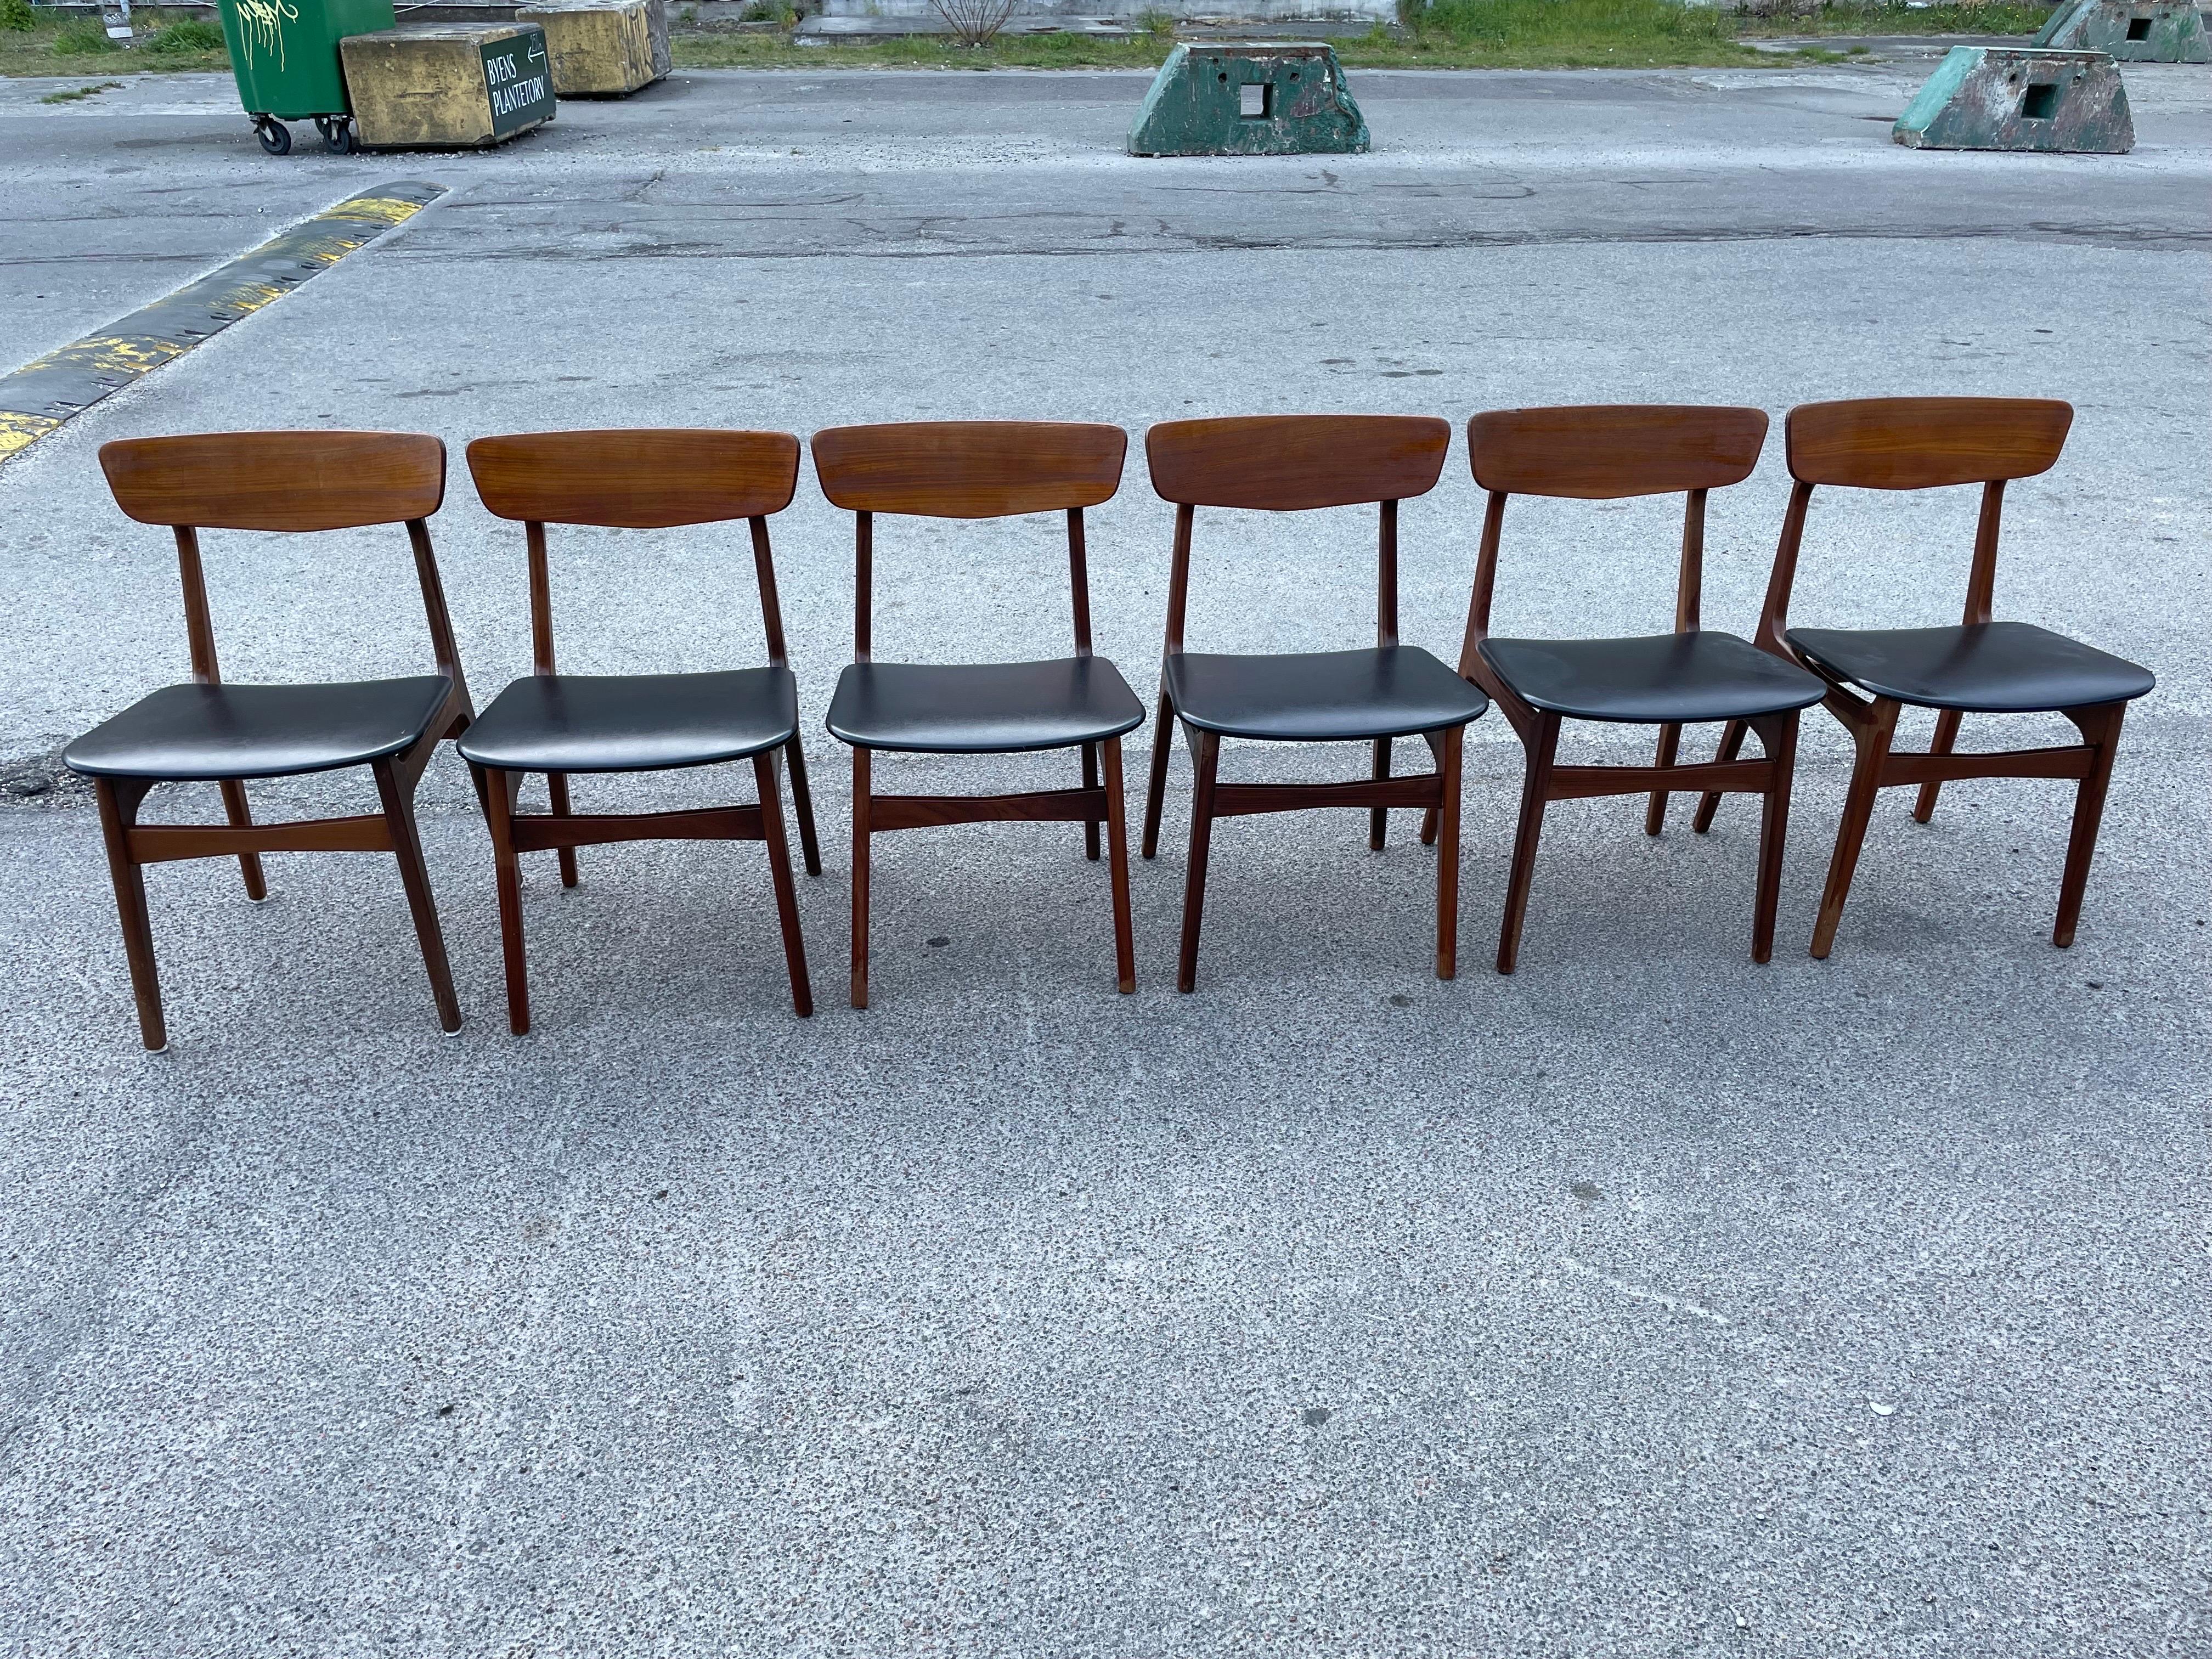 Mid-20th Century Set of 6 Midcentury Danish Chairs in Teak by Schiønning & Elgaard, 1960s For Sale